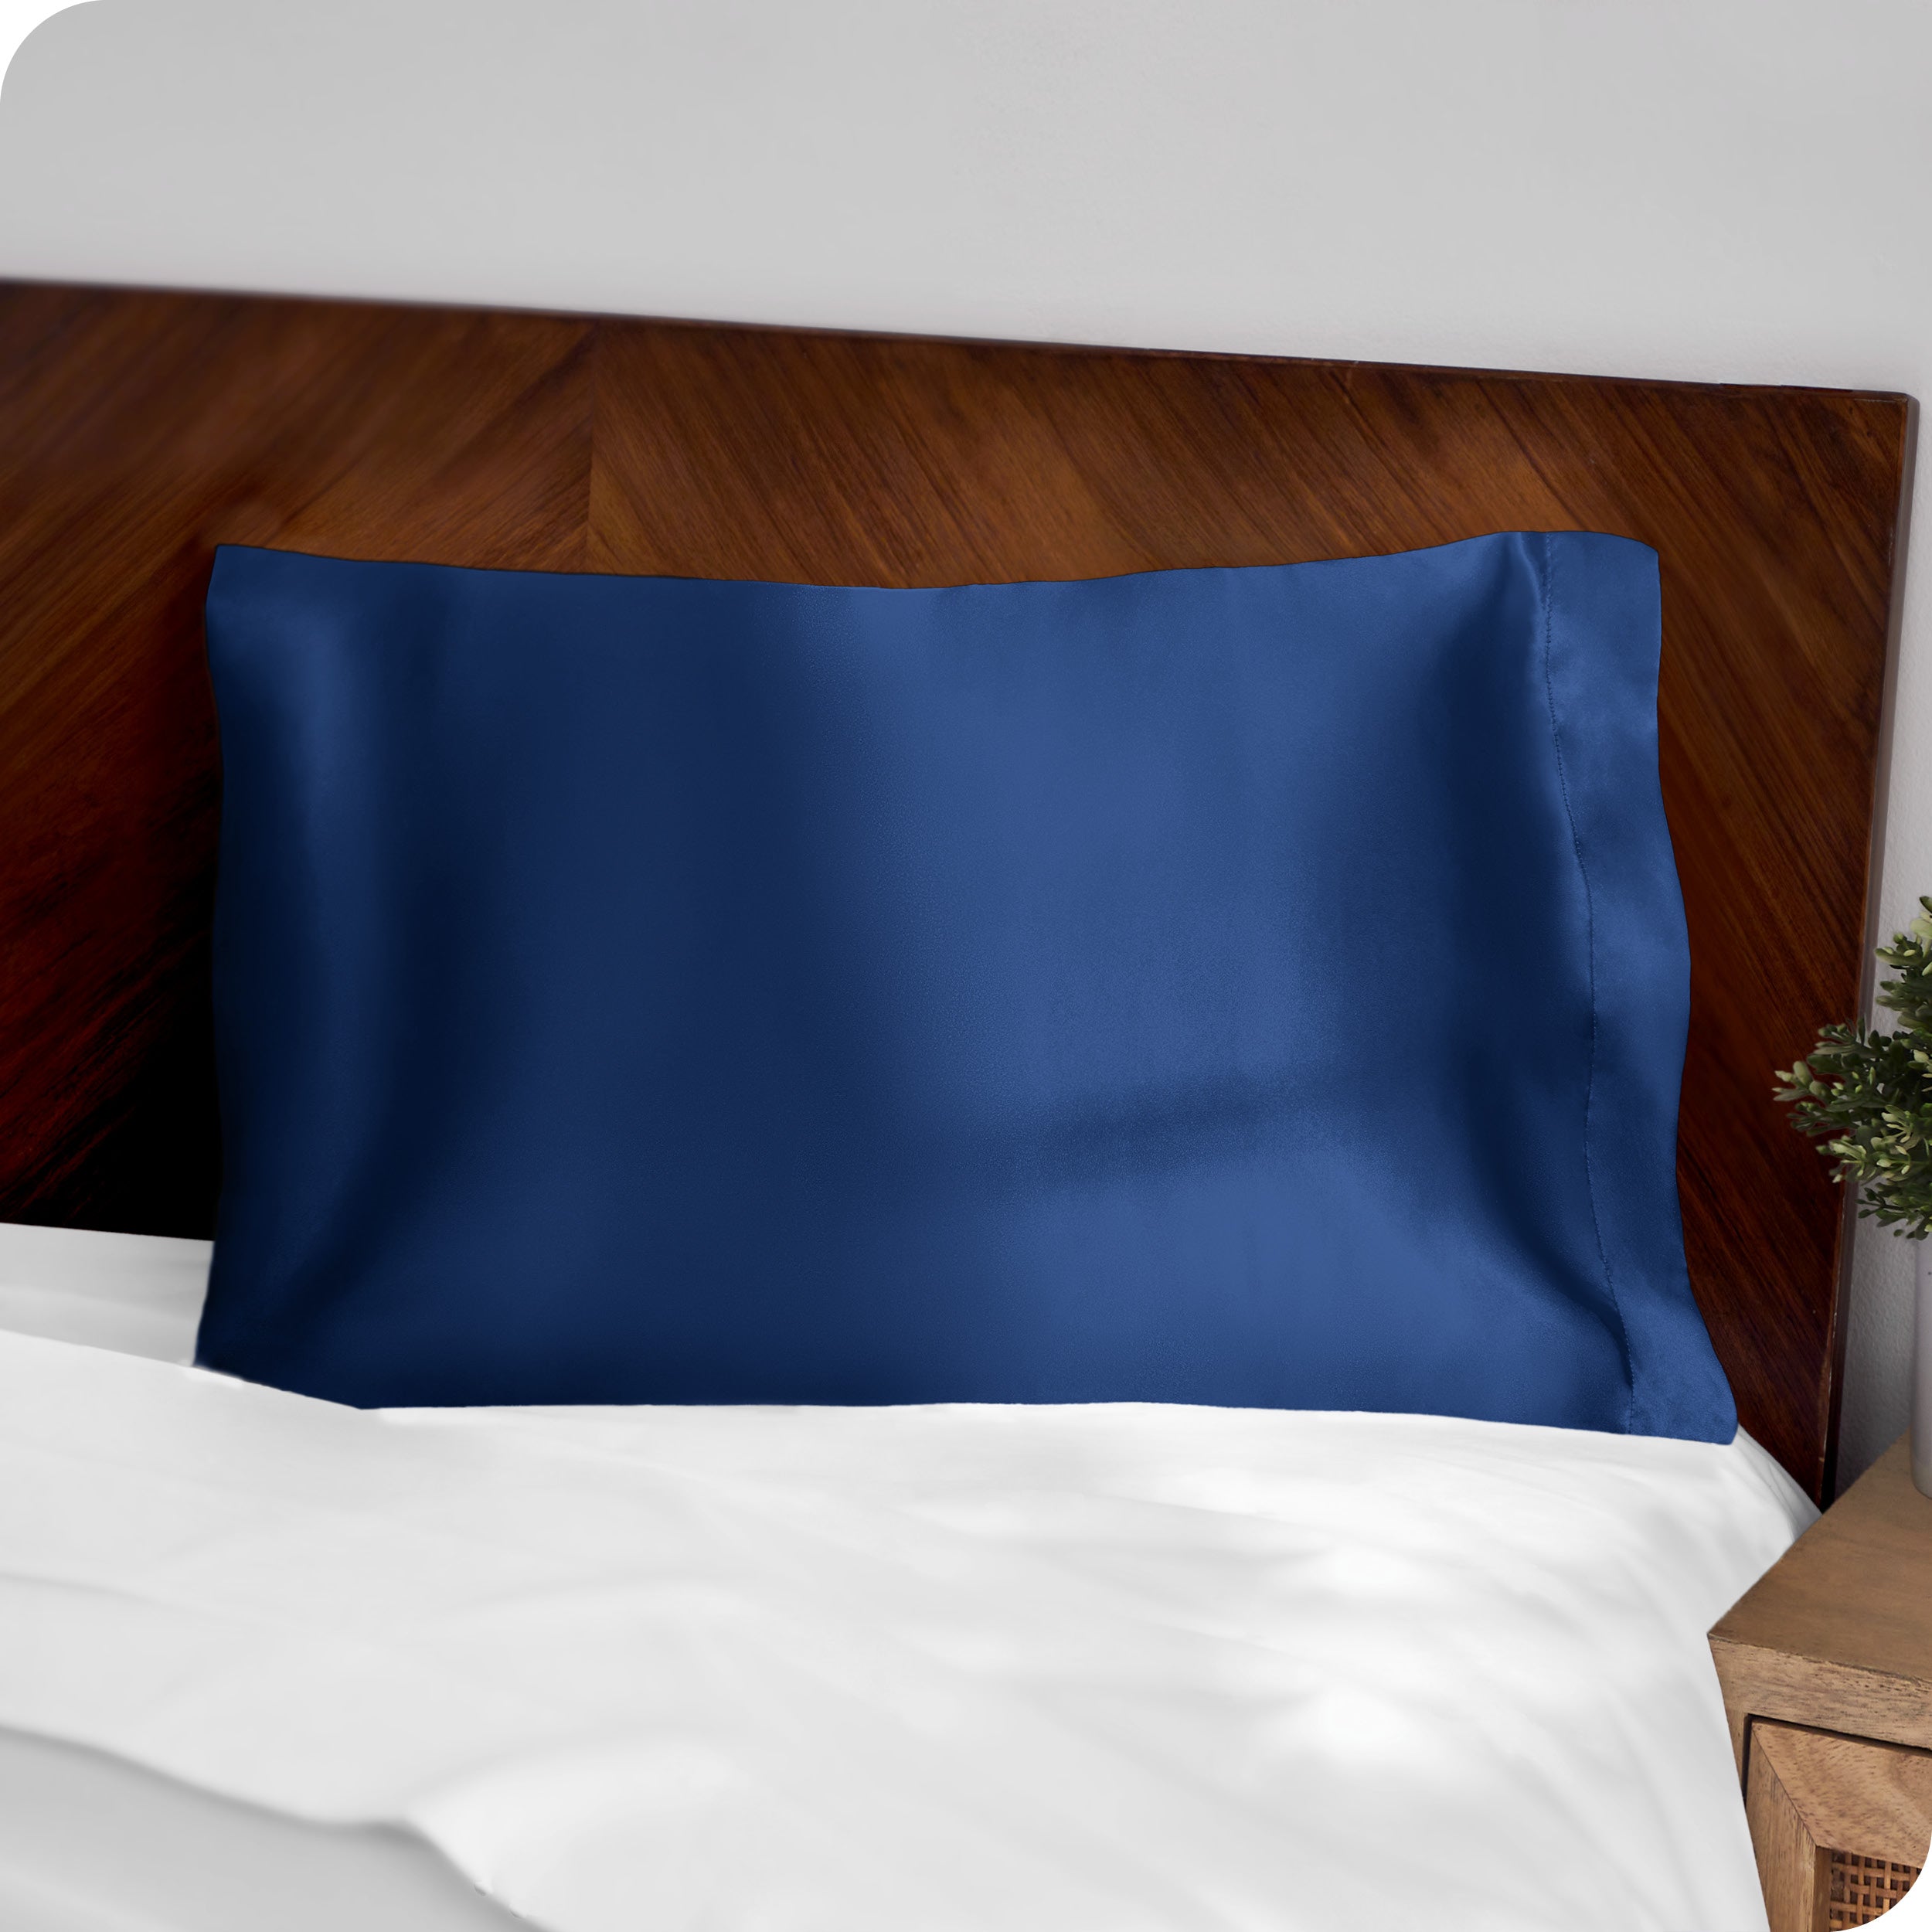 A dark blue silk pillowcase on a pillow resting on a headboard